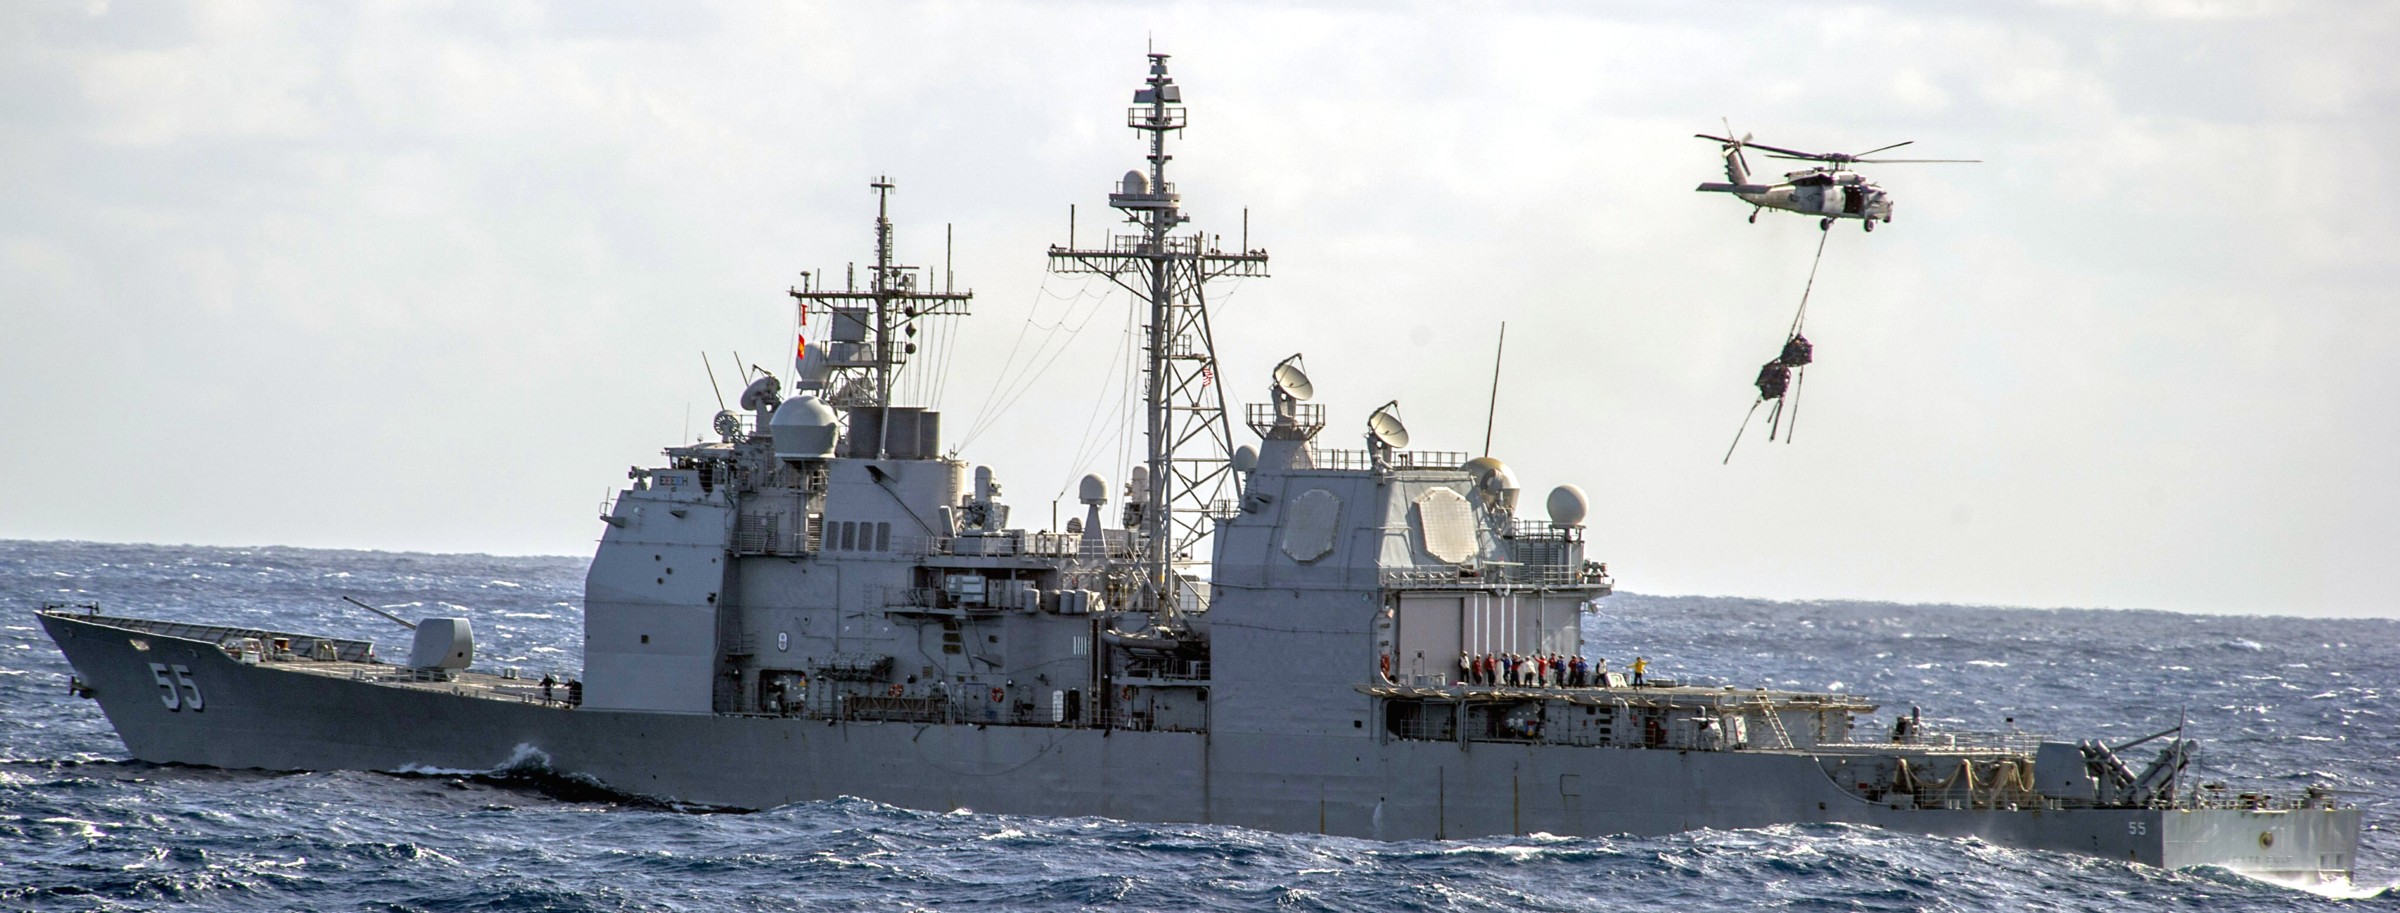 cg-55 uss leyte gulf ticonderoga class guided missile cruiser aegis us navy atlantic ocean 41